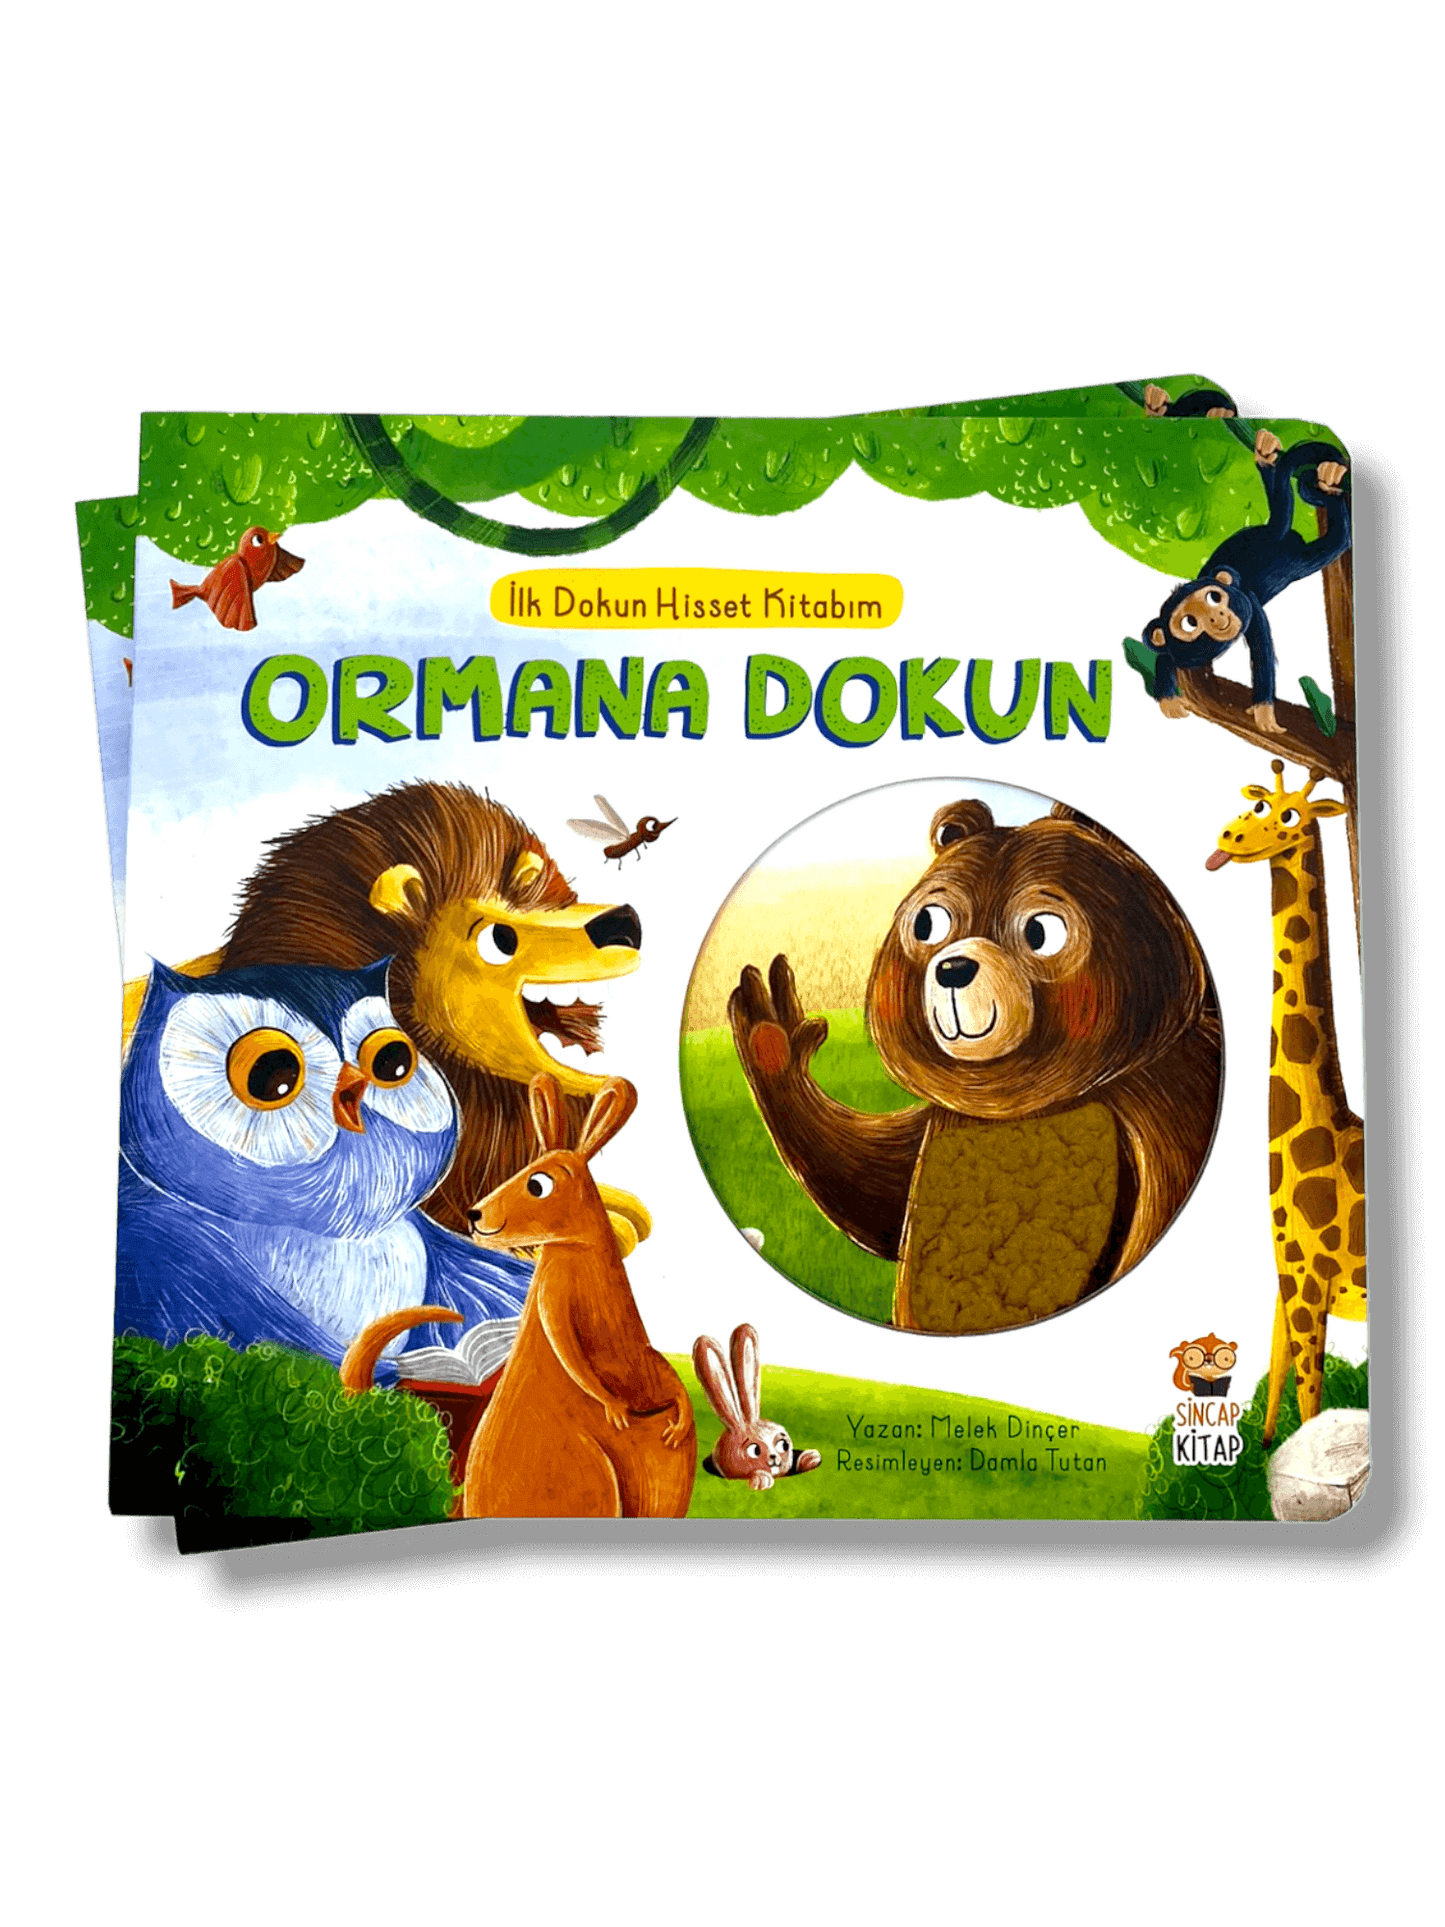 ORMANA DOKUN🌿 ILK DOKUN HISSET KITABIM (Mein erstes Fühlbuch)